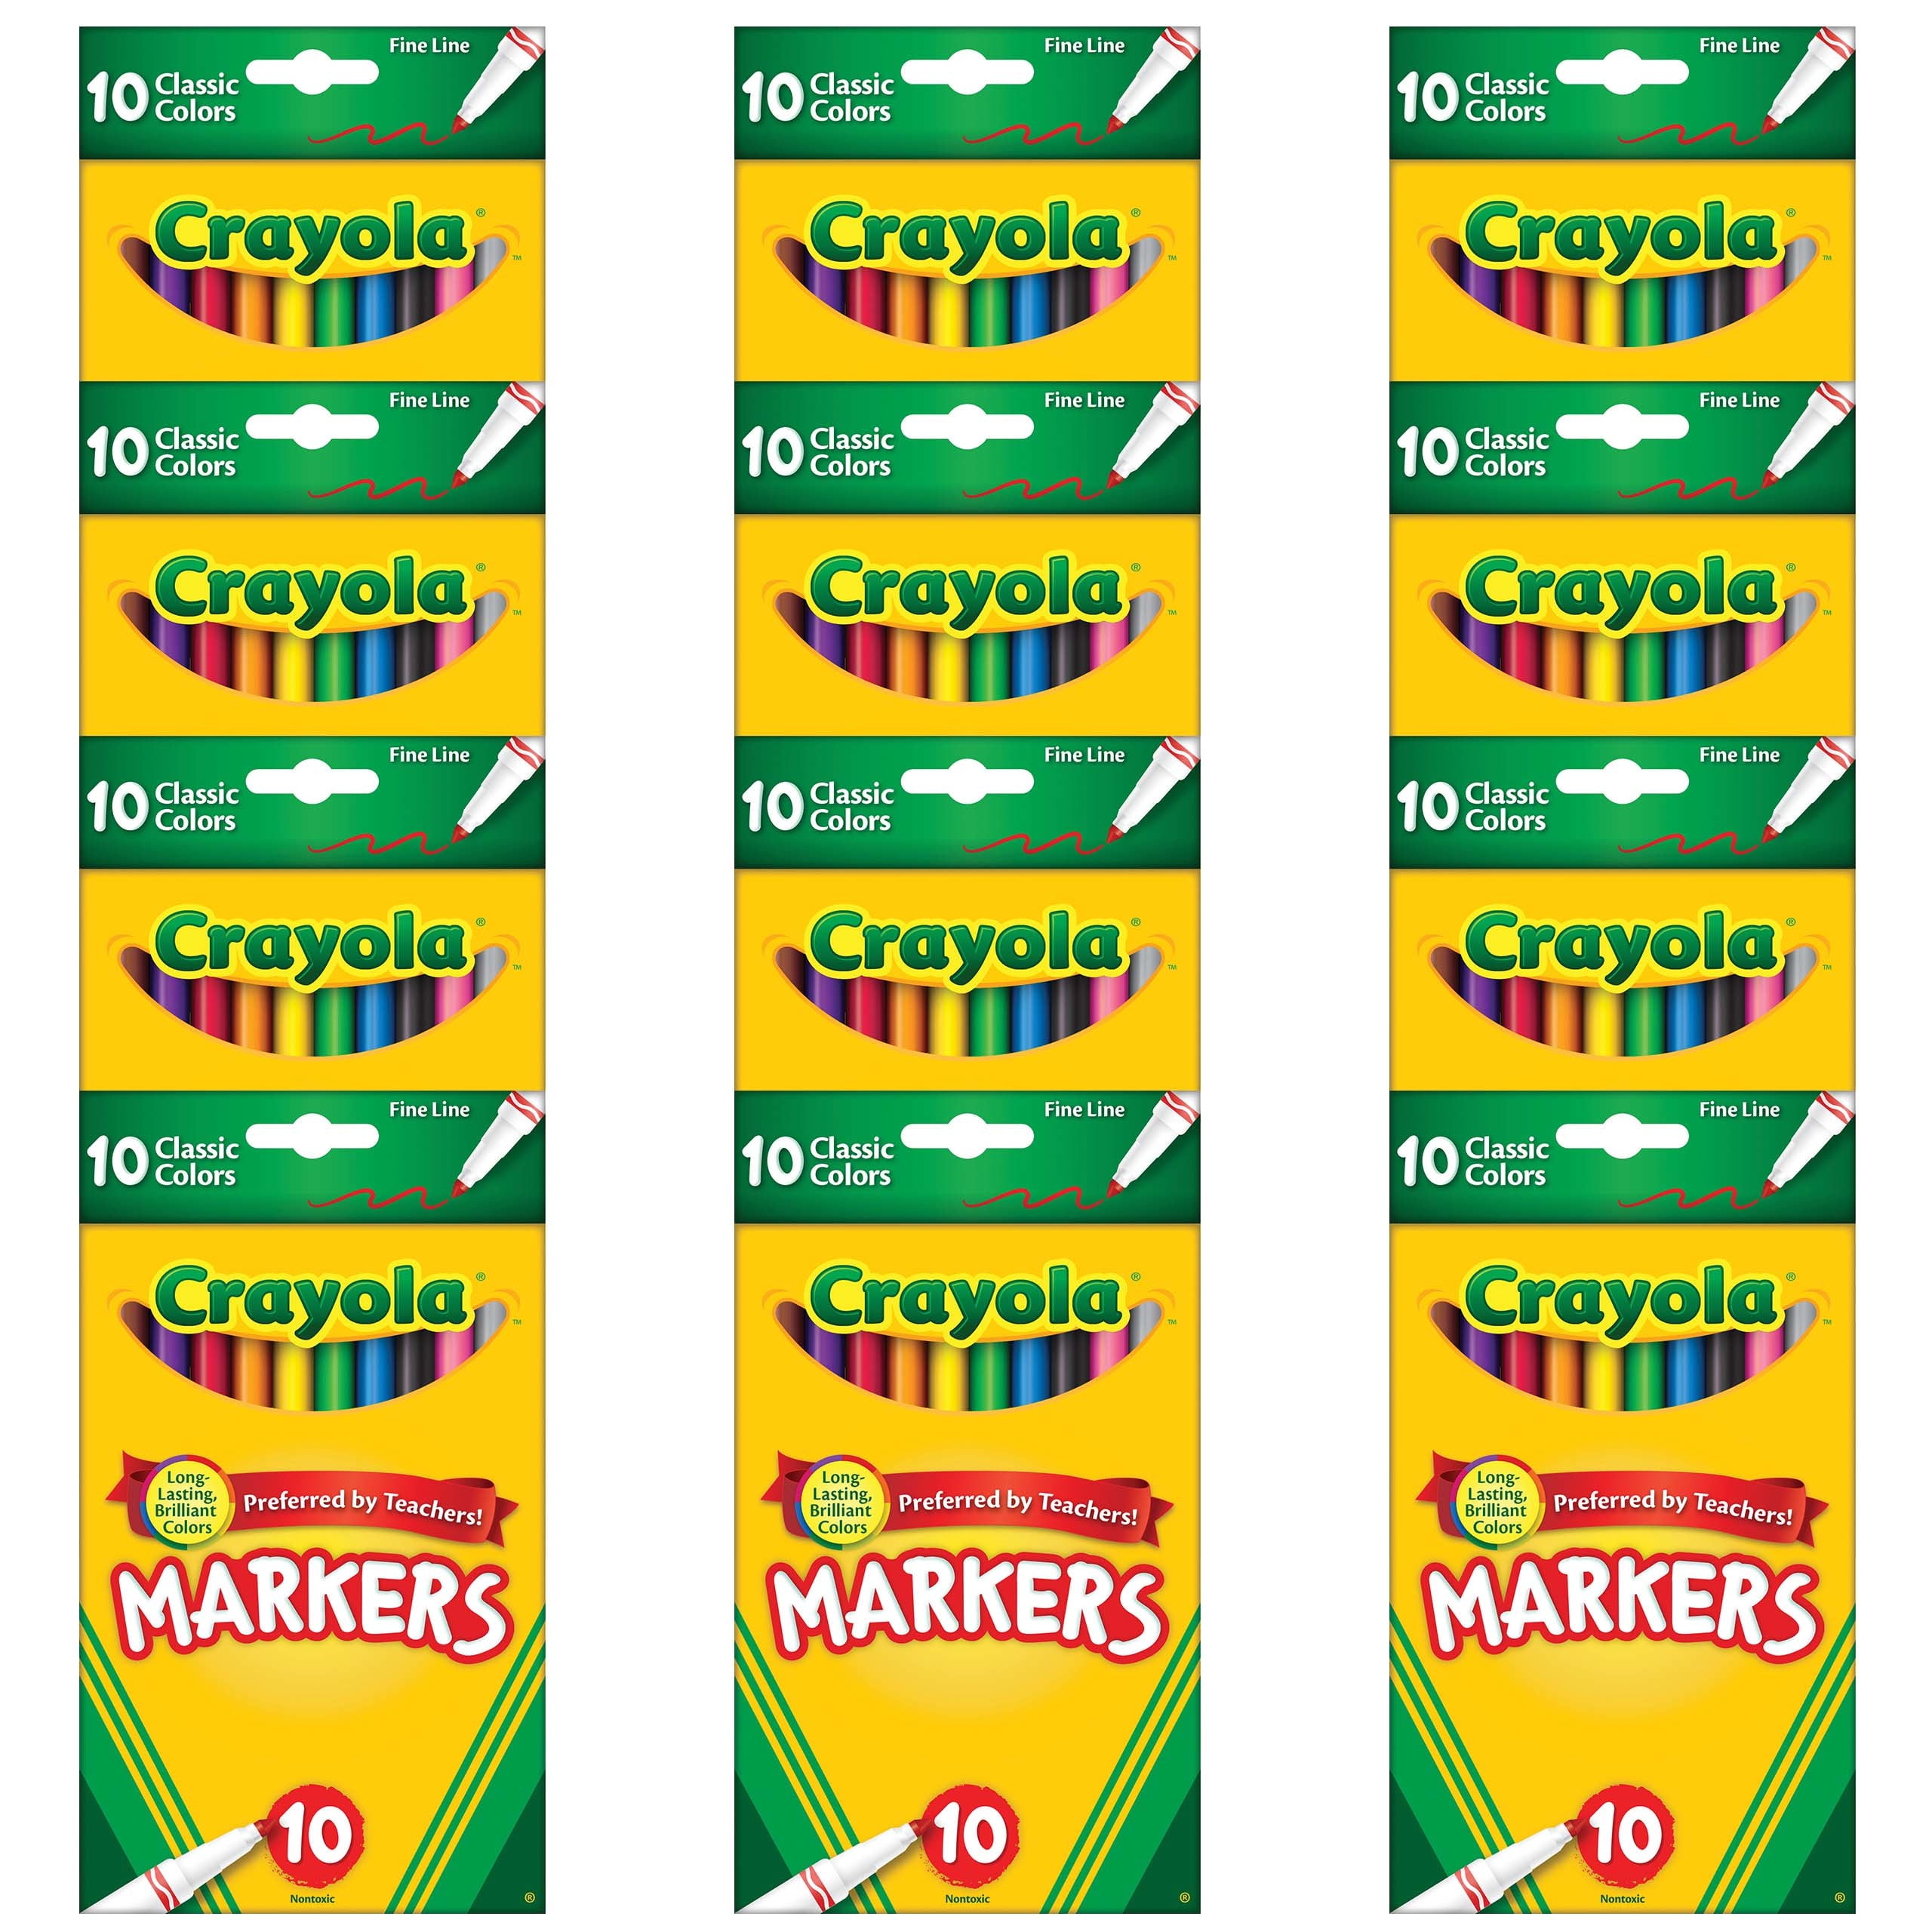 Fun Express 12 Mini Marker Sets For Kids (1 Dozen per set)